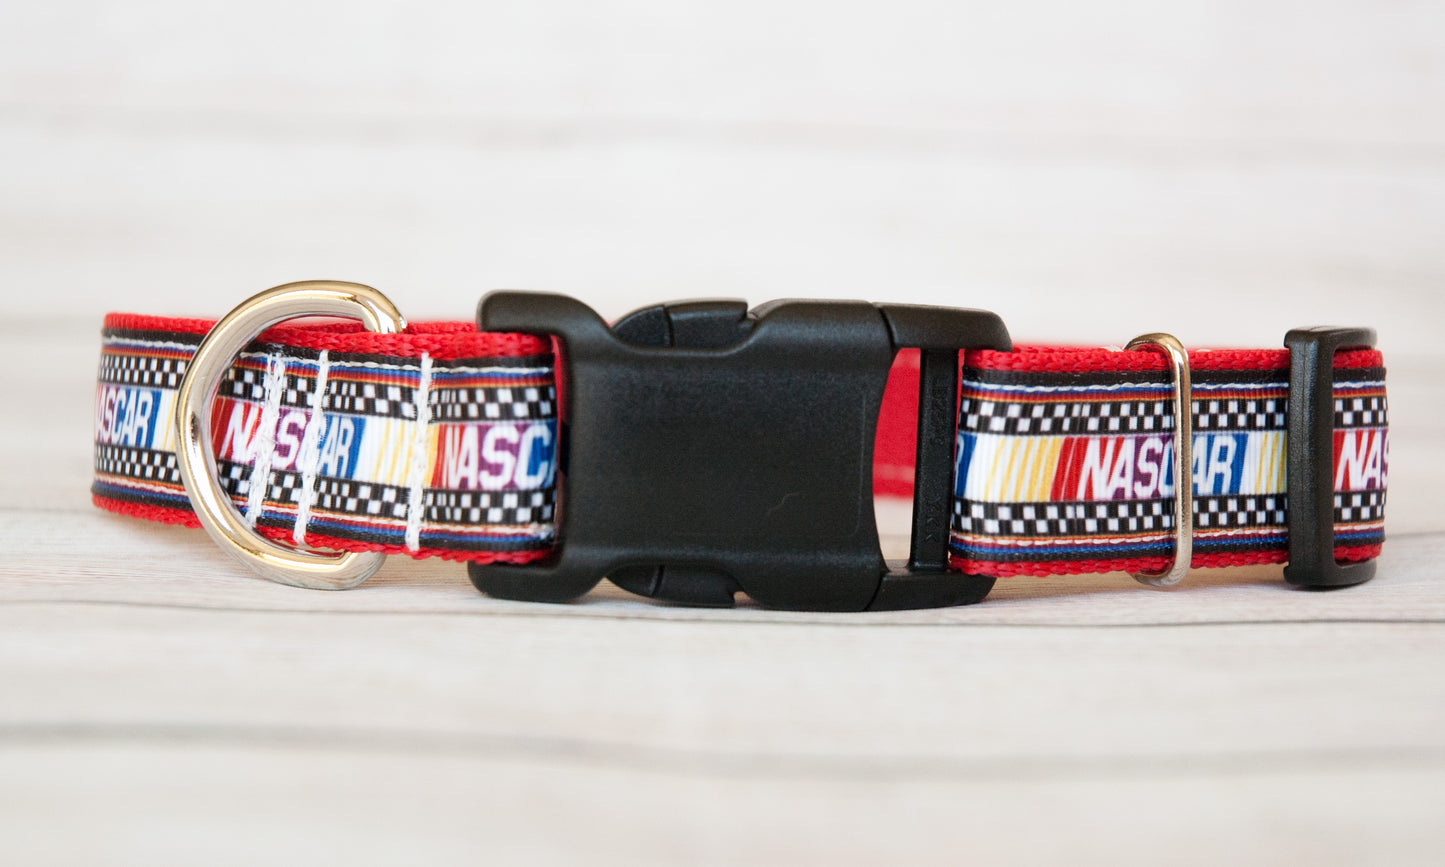 Nascar dog collar, Car Racing dog collar. 1" or 3/4" wide